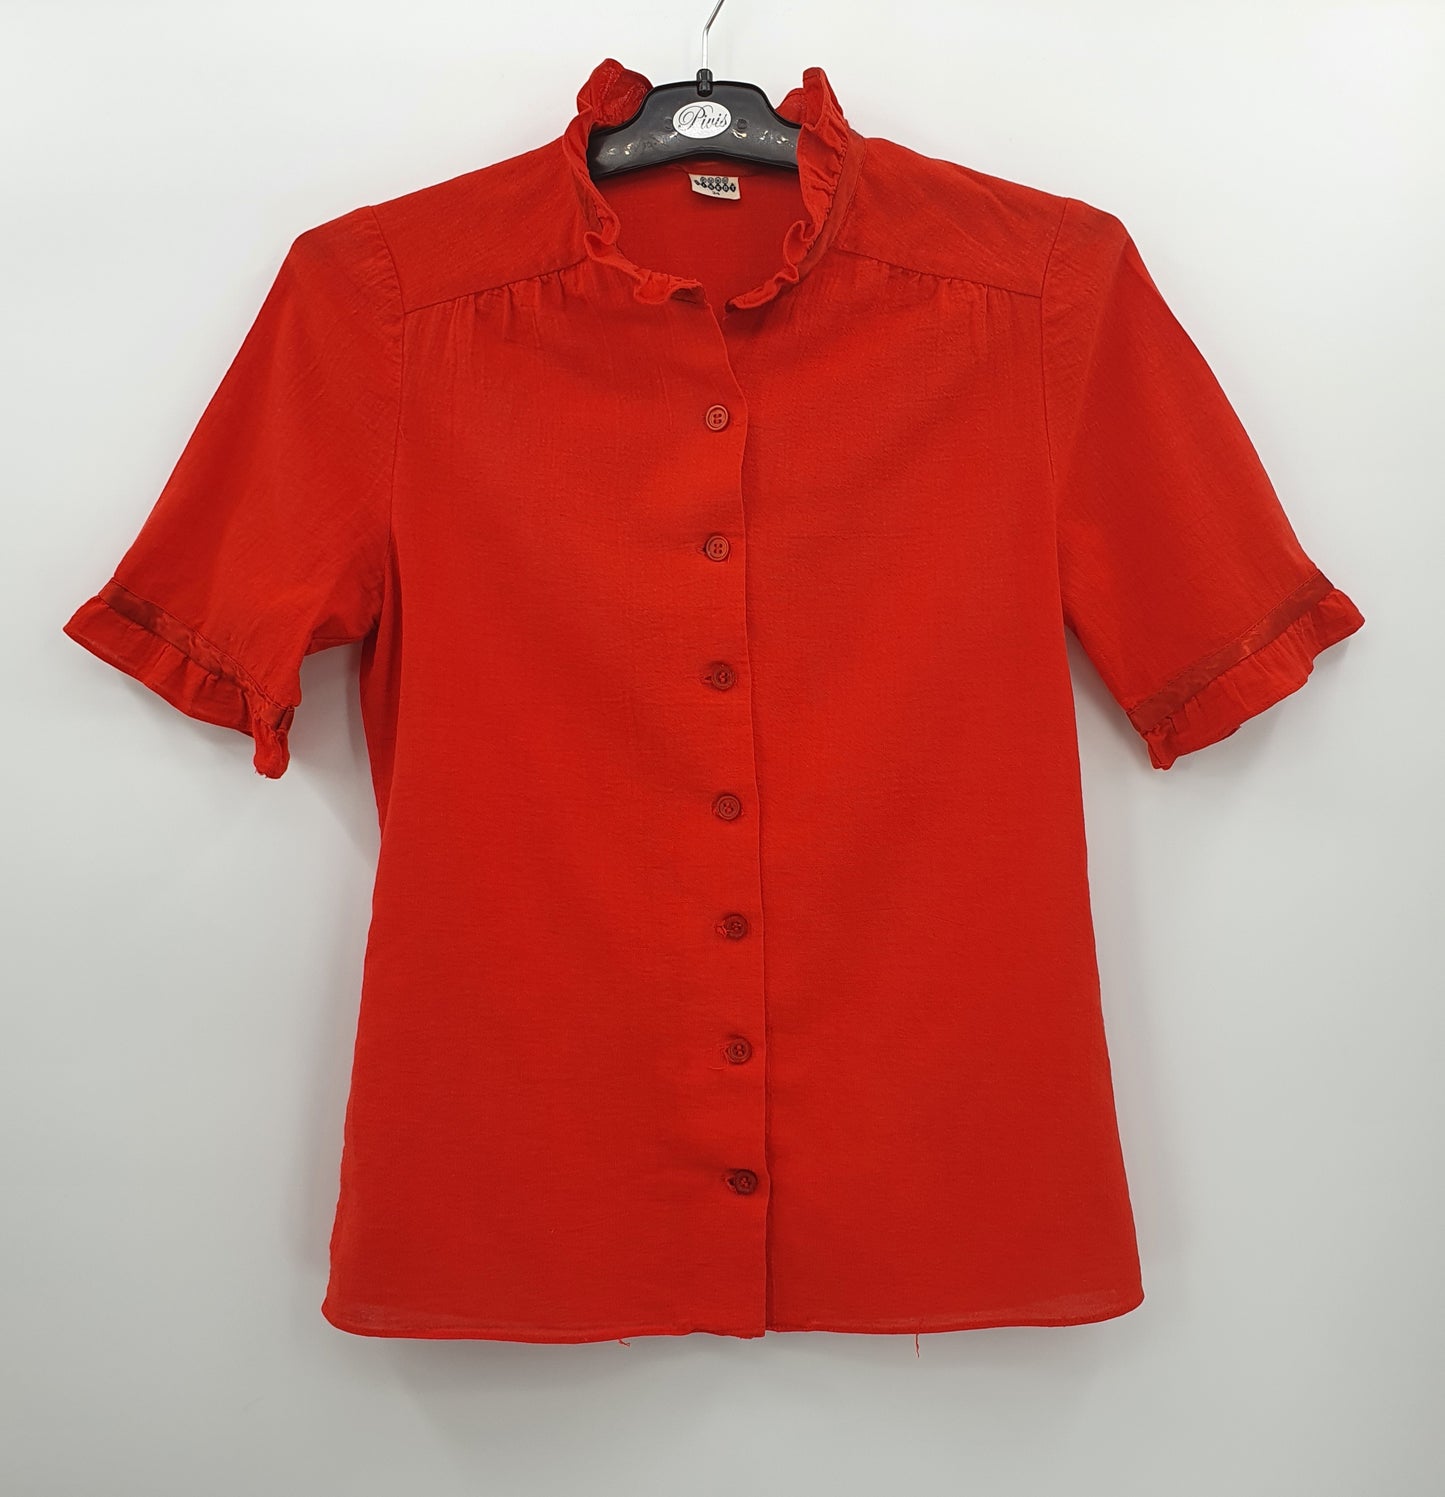 Puku-Siskot, punainen paita, 70-luku, koko 34-36